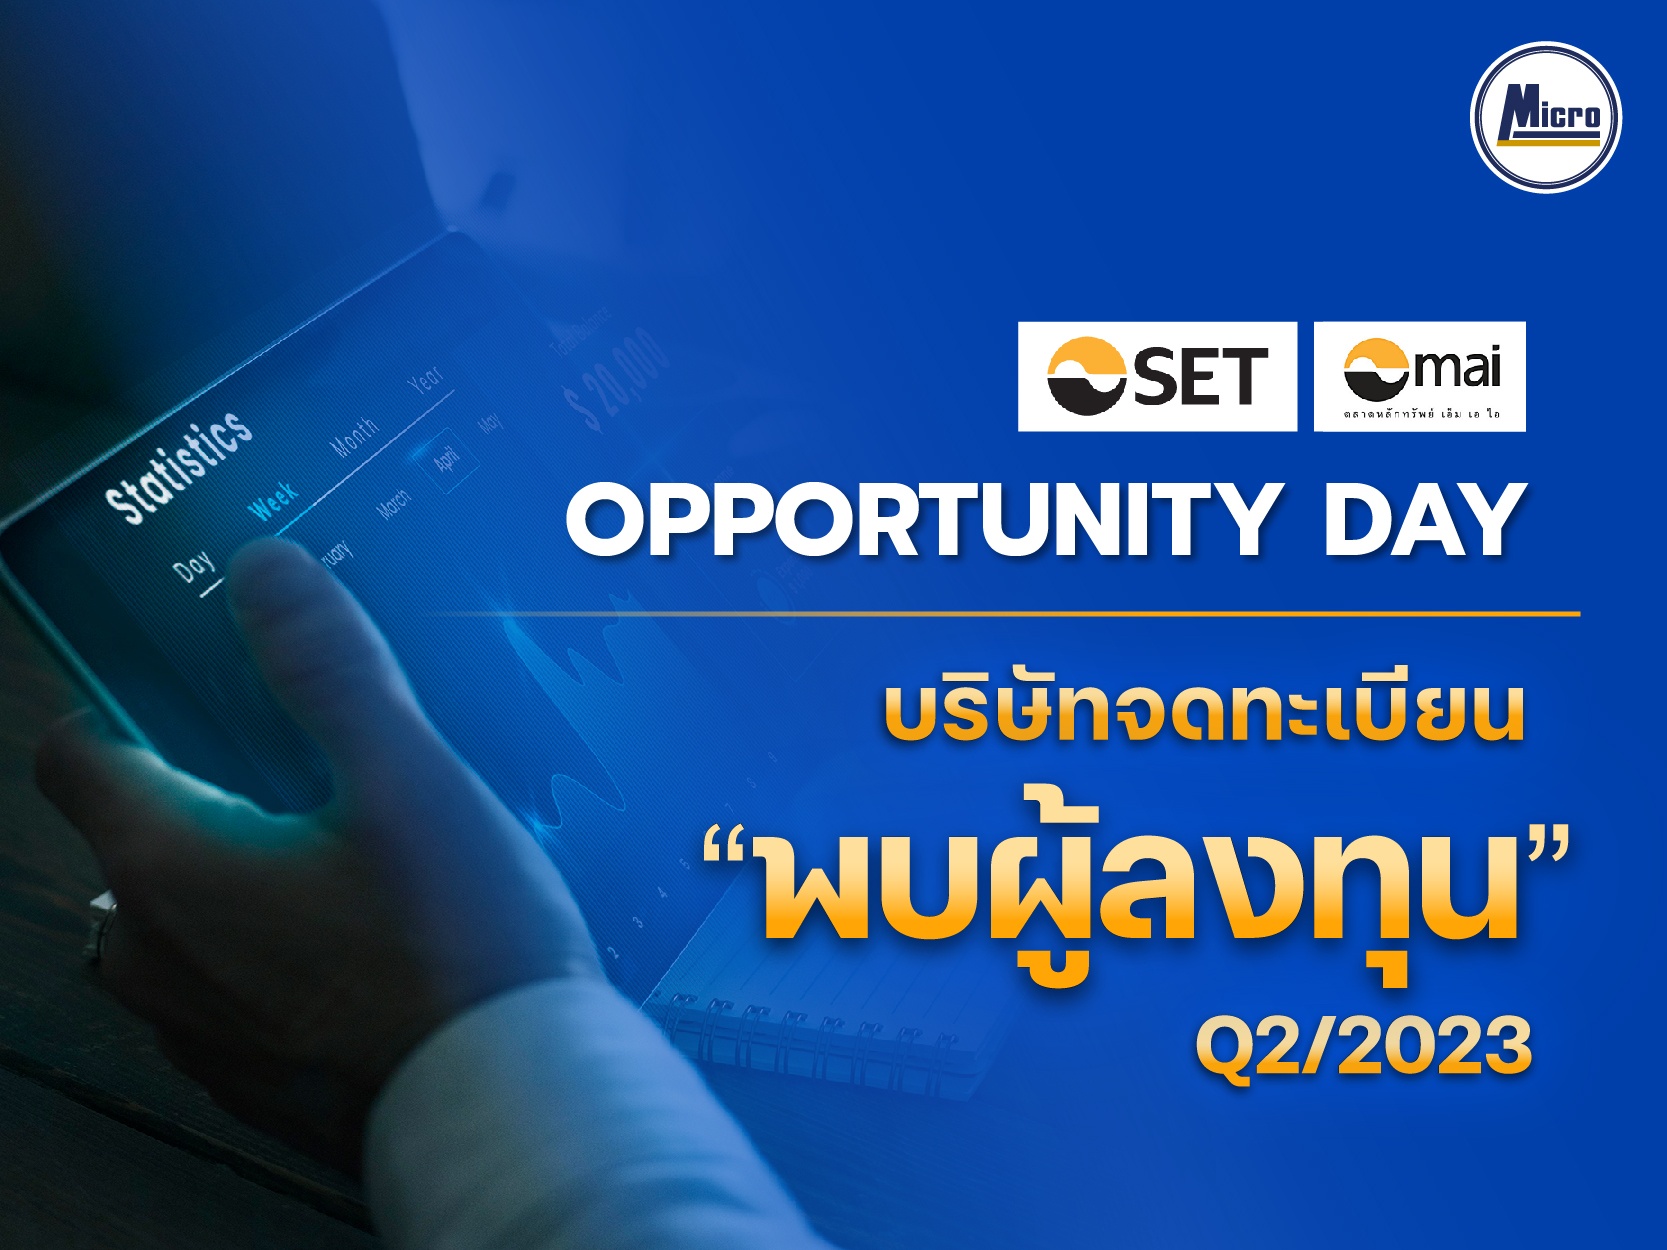 SET Opportunity Day บริษัทจดทะเบียน"พบผู้ลงทุน" Q2/2023 | บริษัท ไมโครลิสซิ่ง จำกัด (มหาชน)